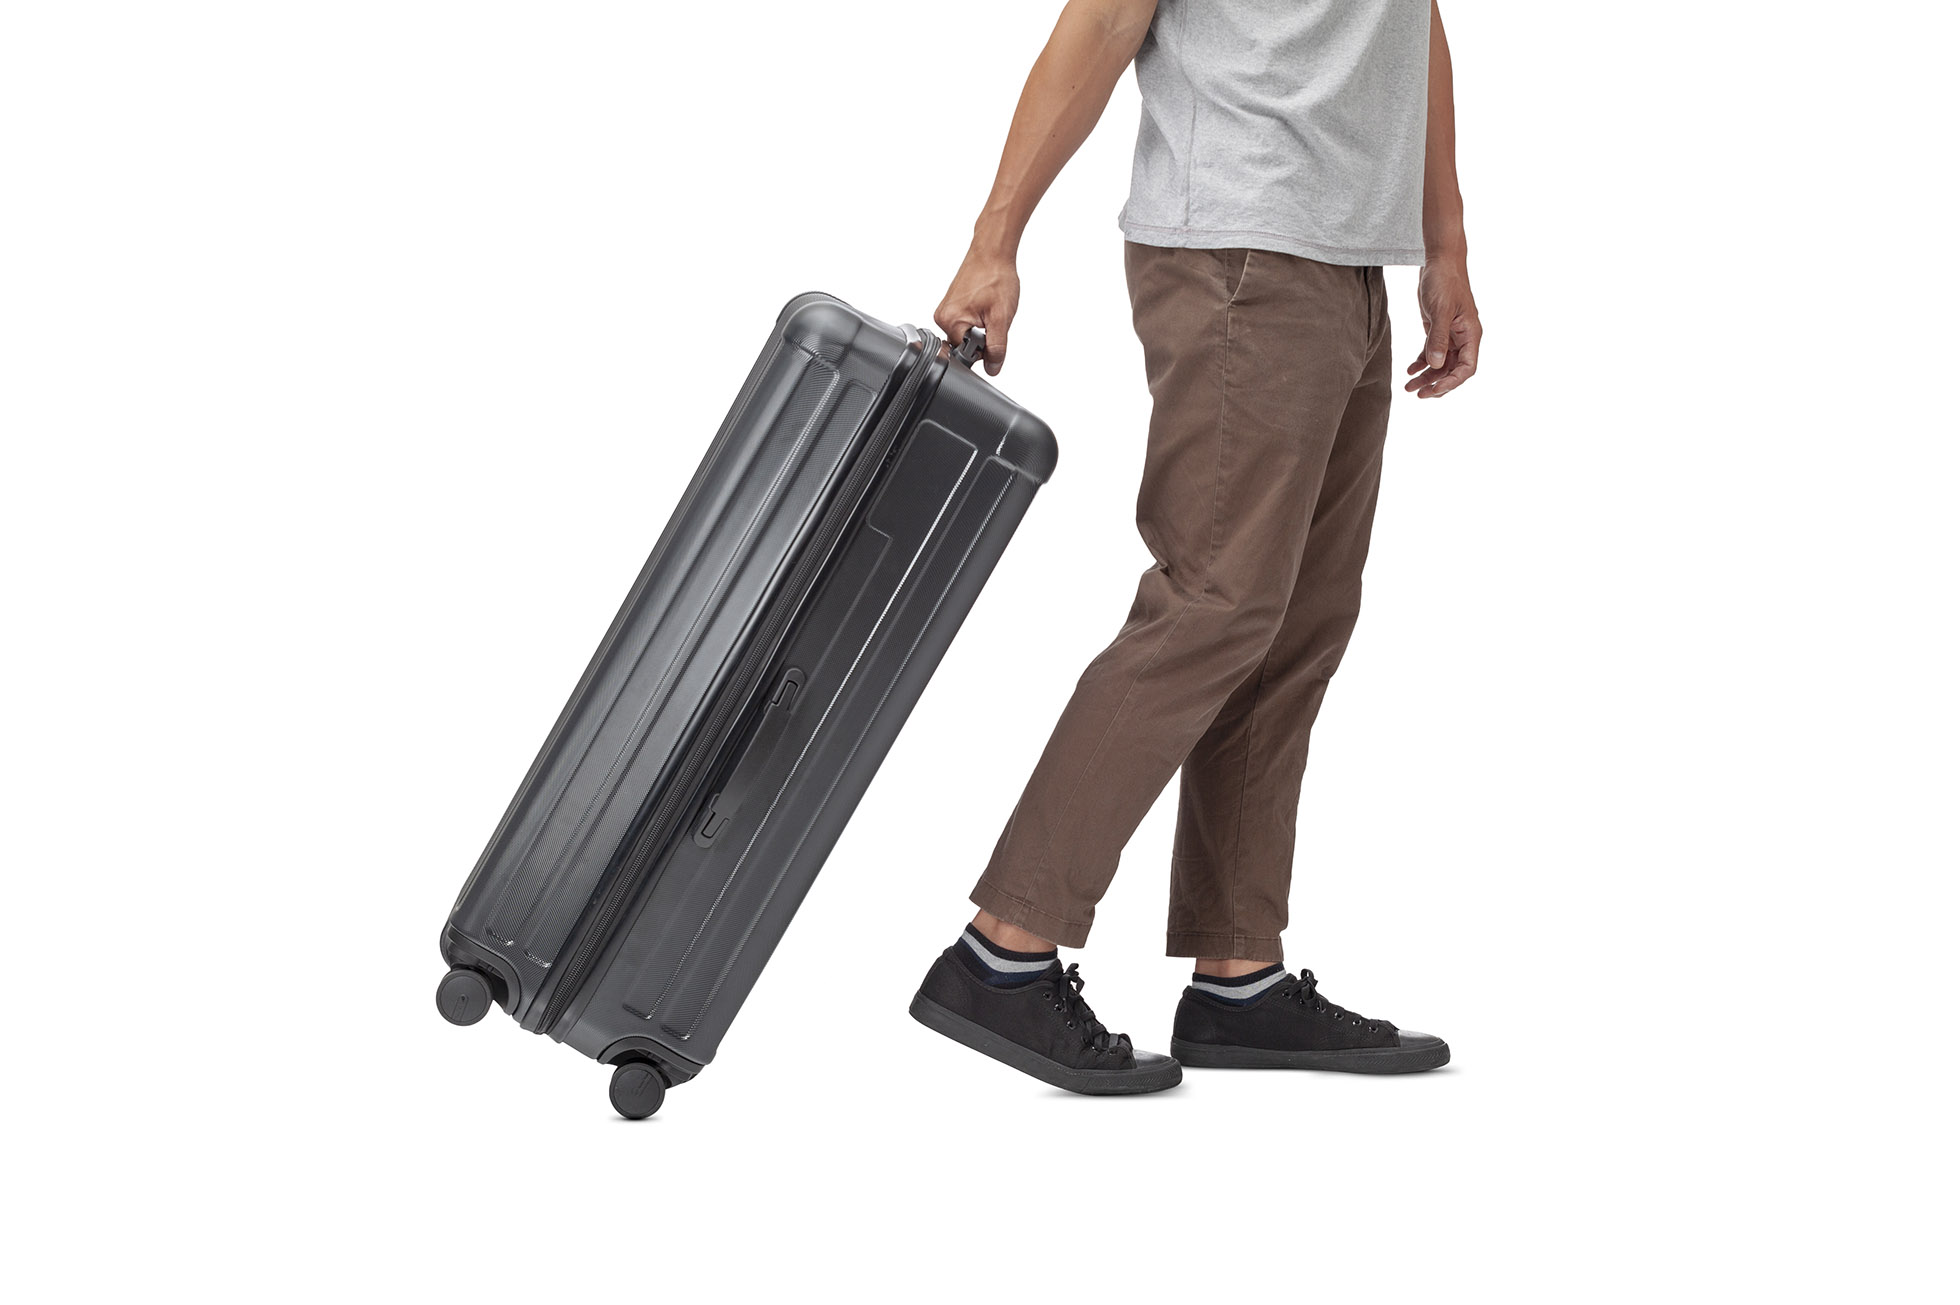 dahon airporter suitcase